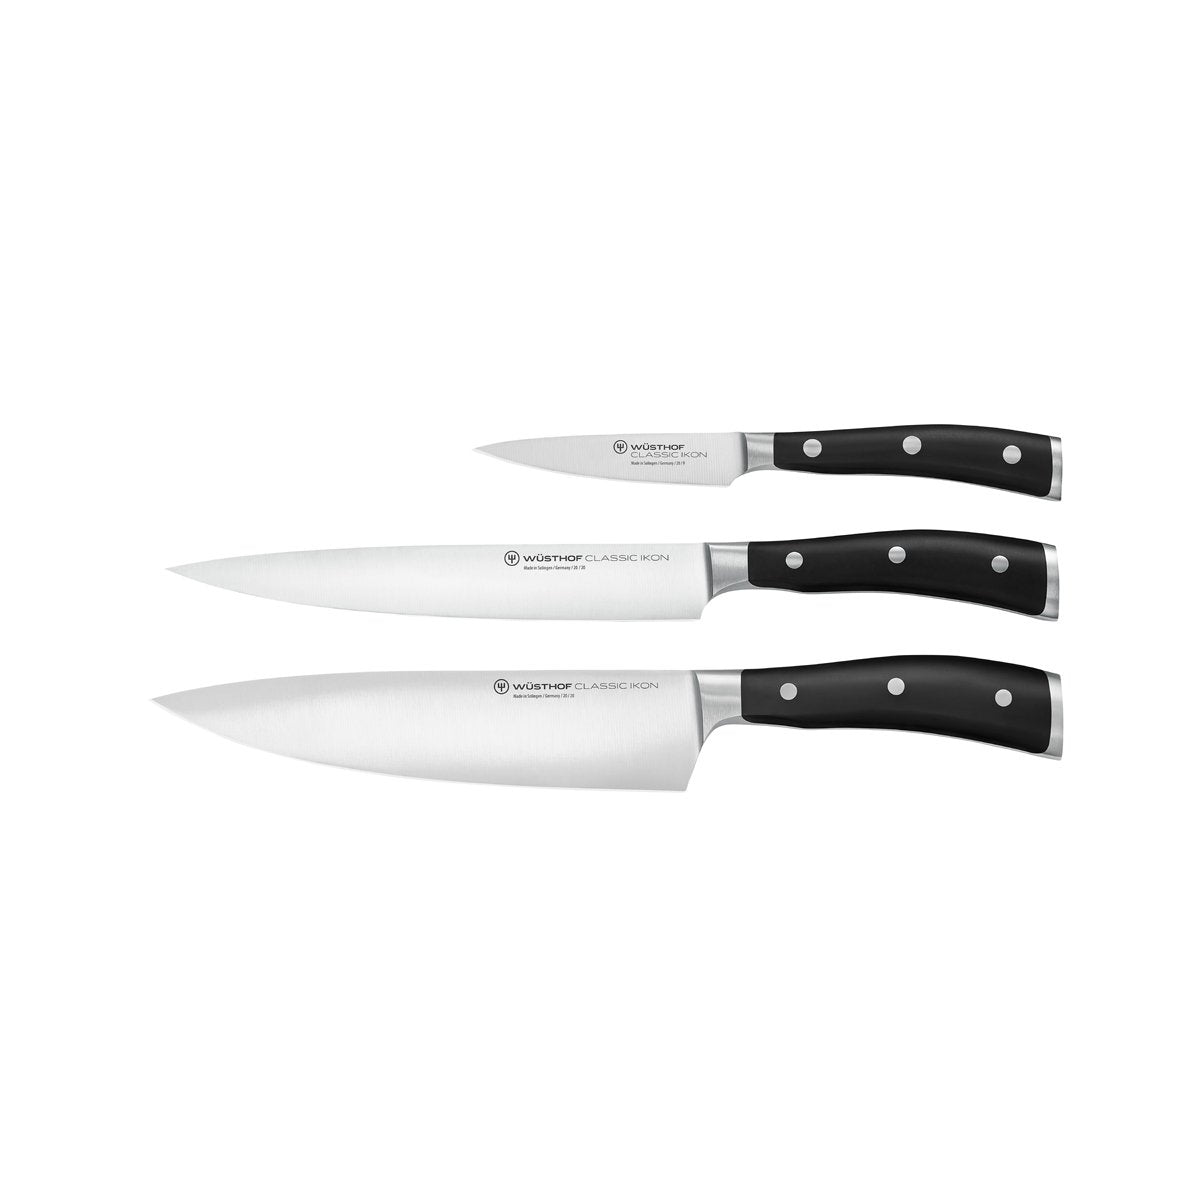 28020 Wusthof Classic Ikon Black Knife Set 3pc Tomkin Australia Hospitality Supplies